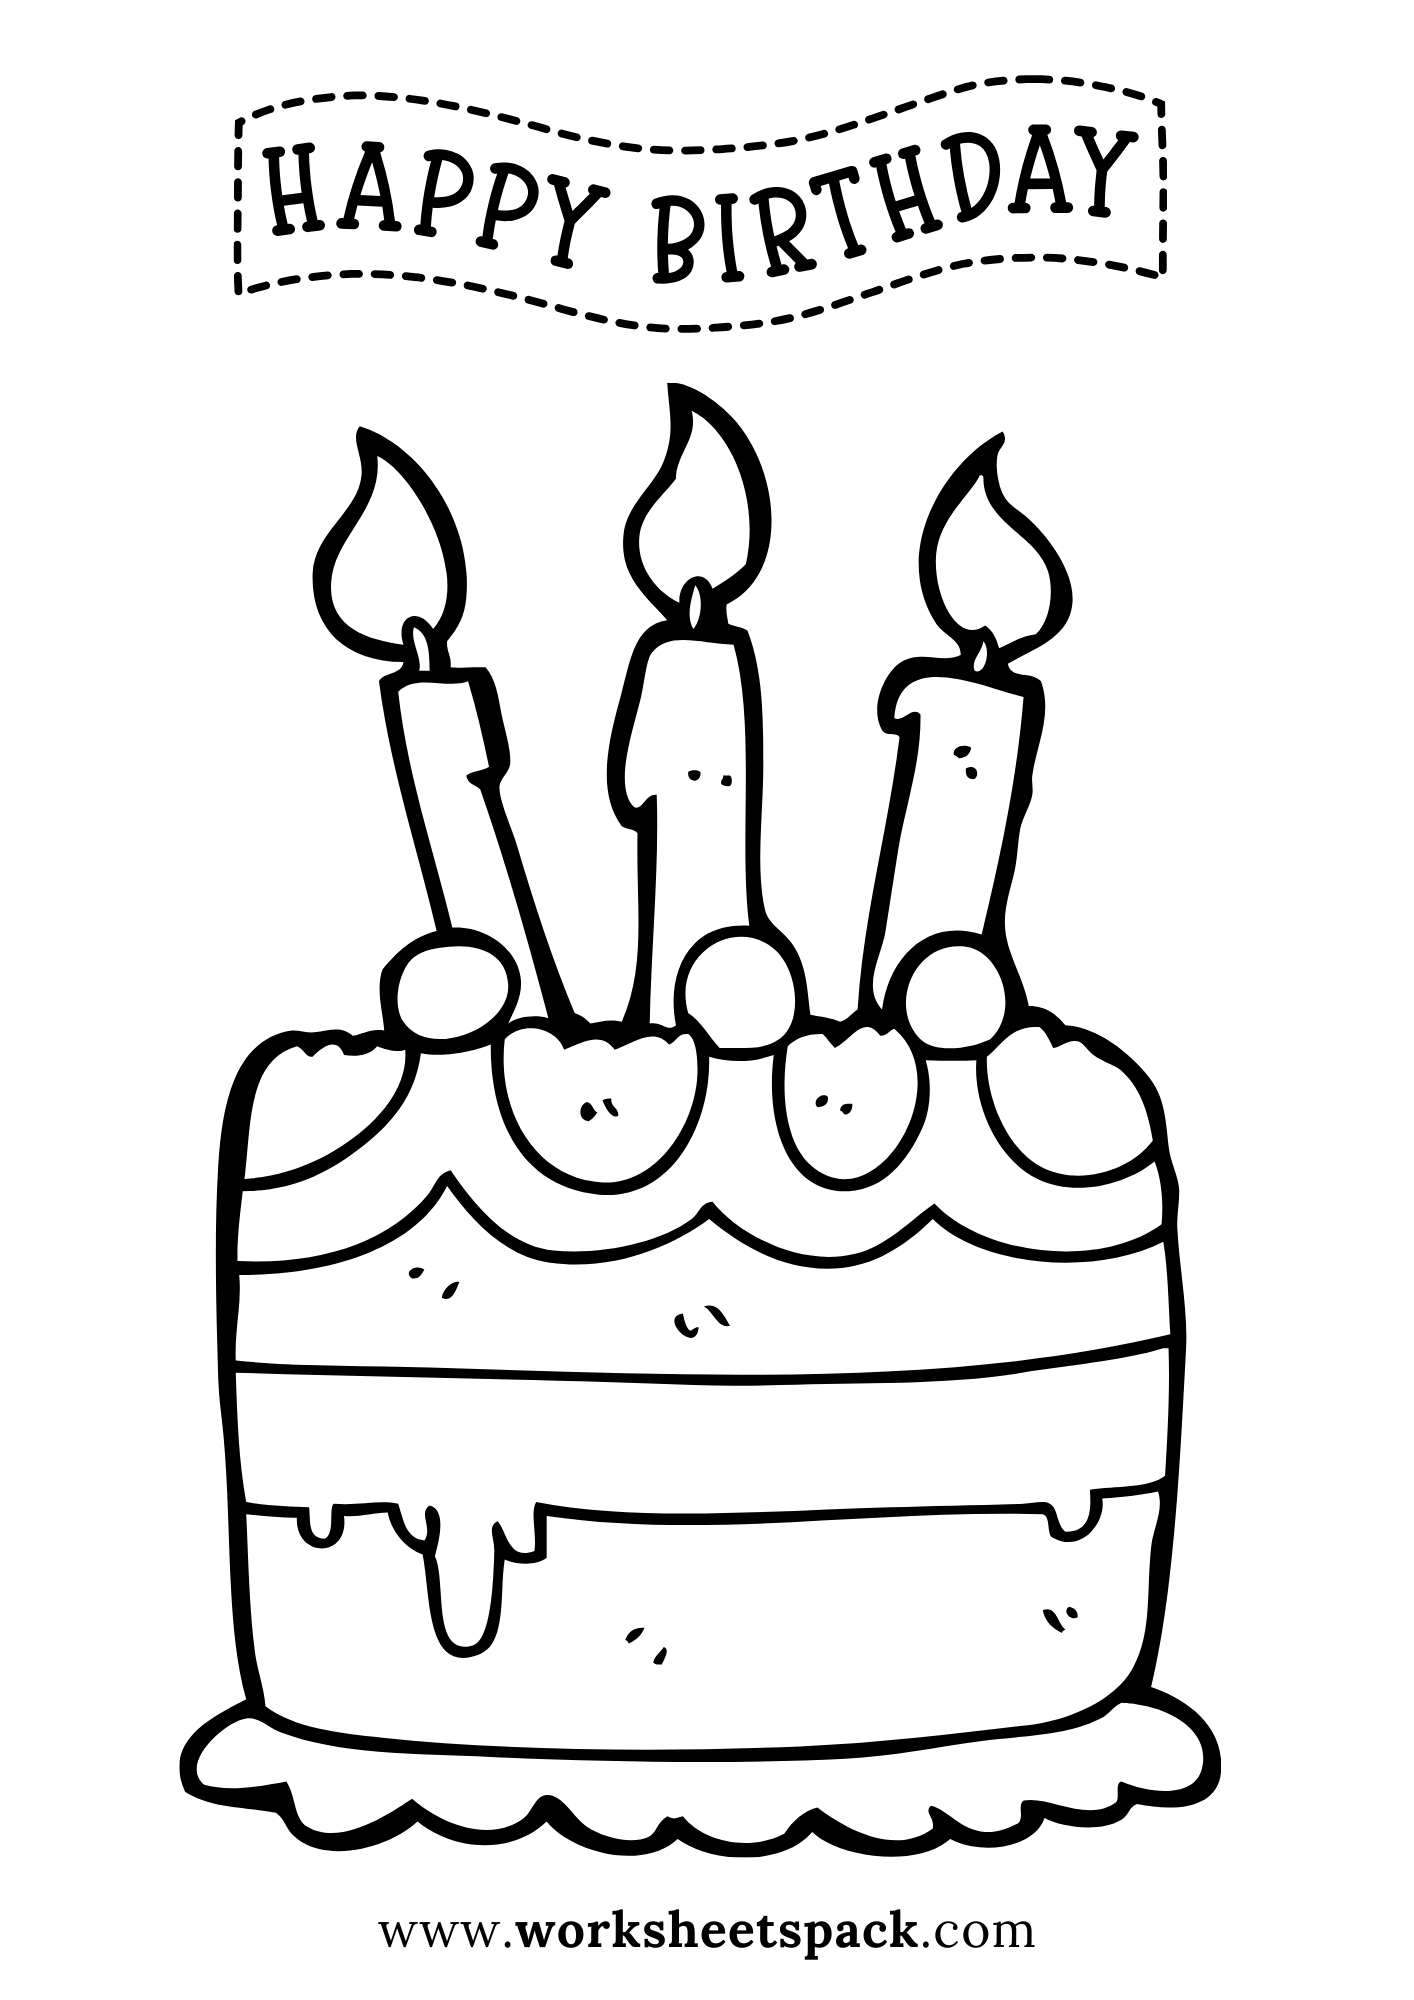 Happy Birthday: 20 Best Birthday Coloring Pages - worksheetspack